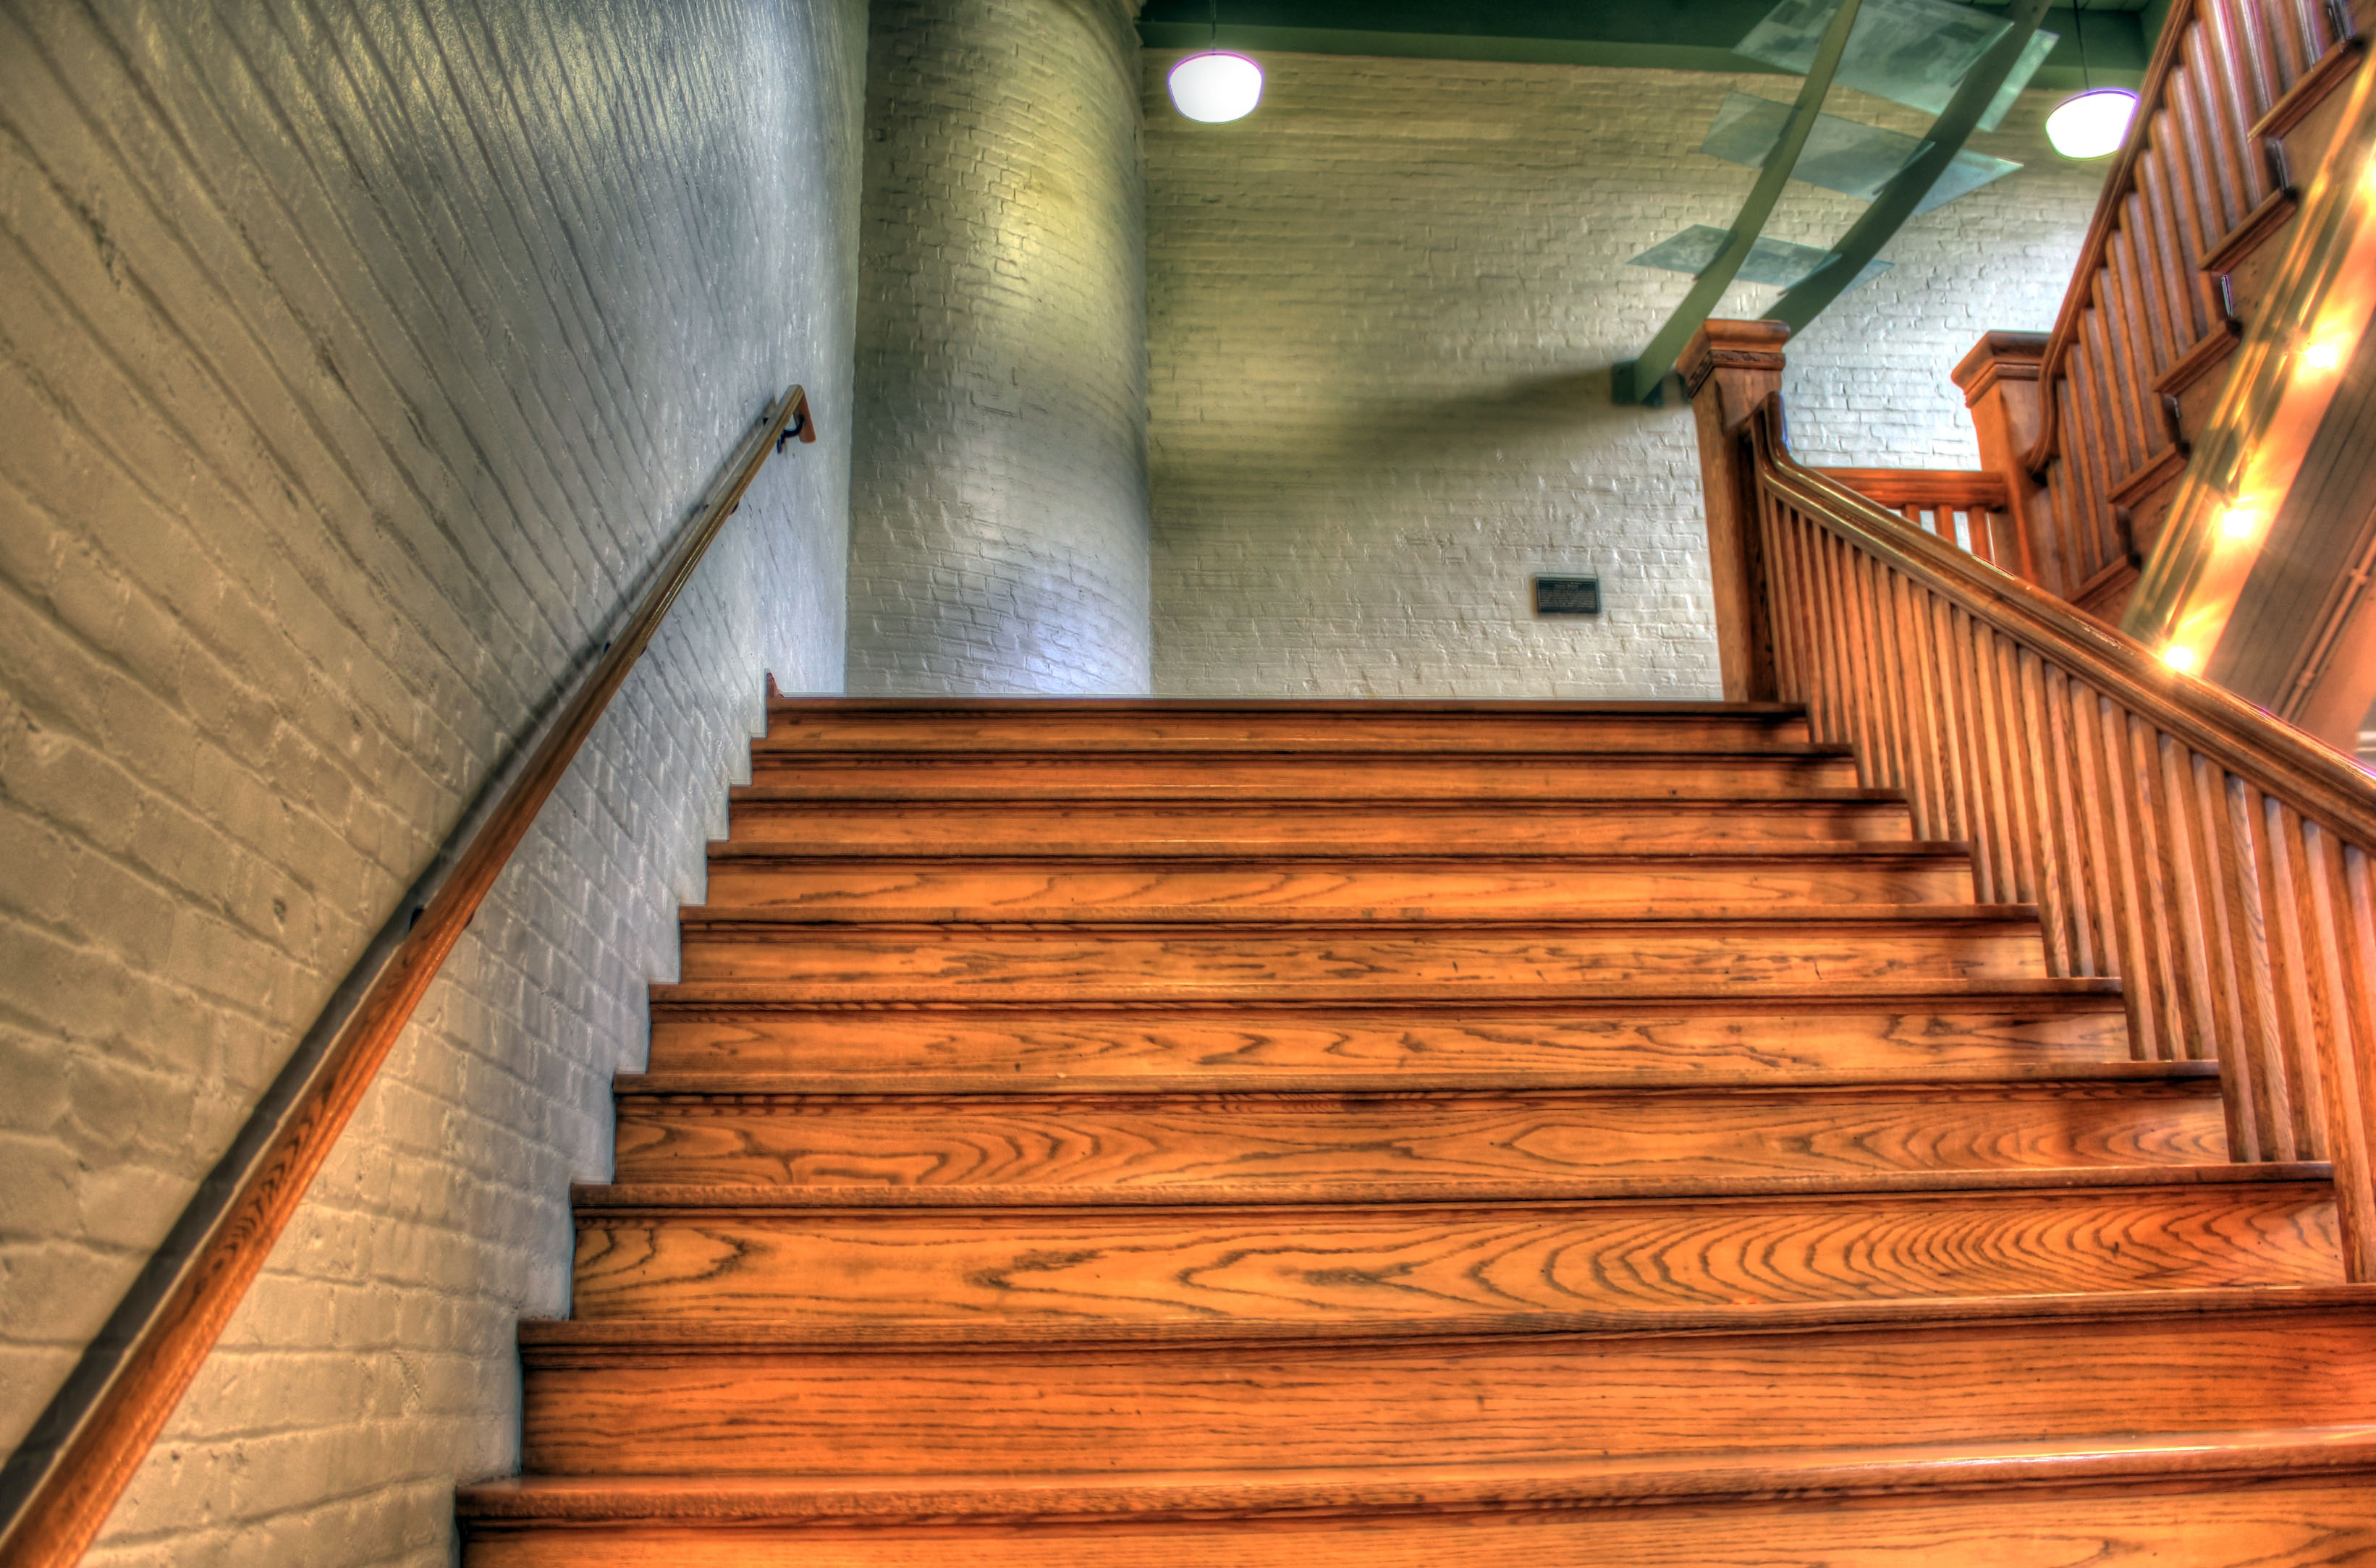 Staircase image - Free stock photo - Public Domain photo - CC0 Images